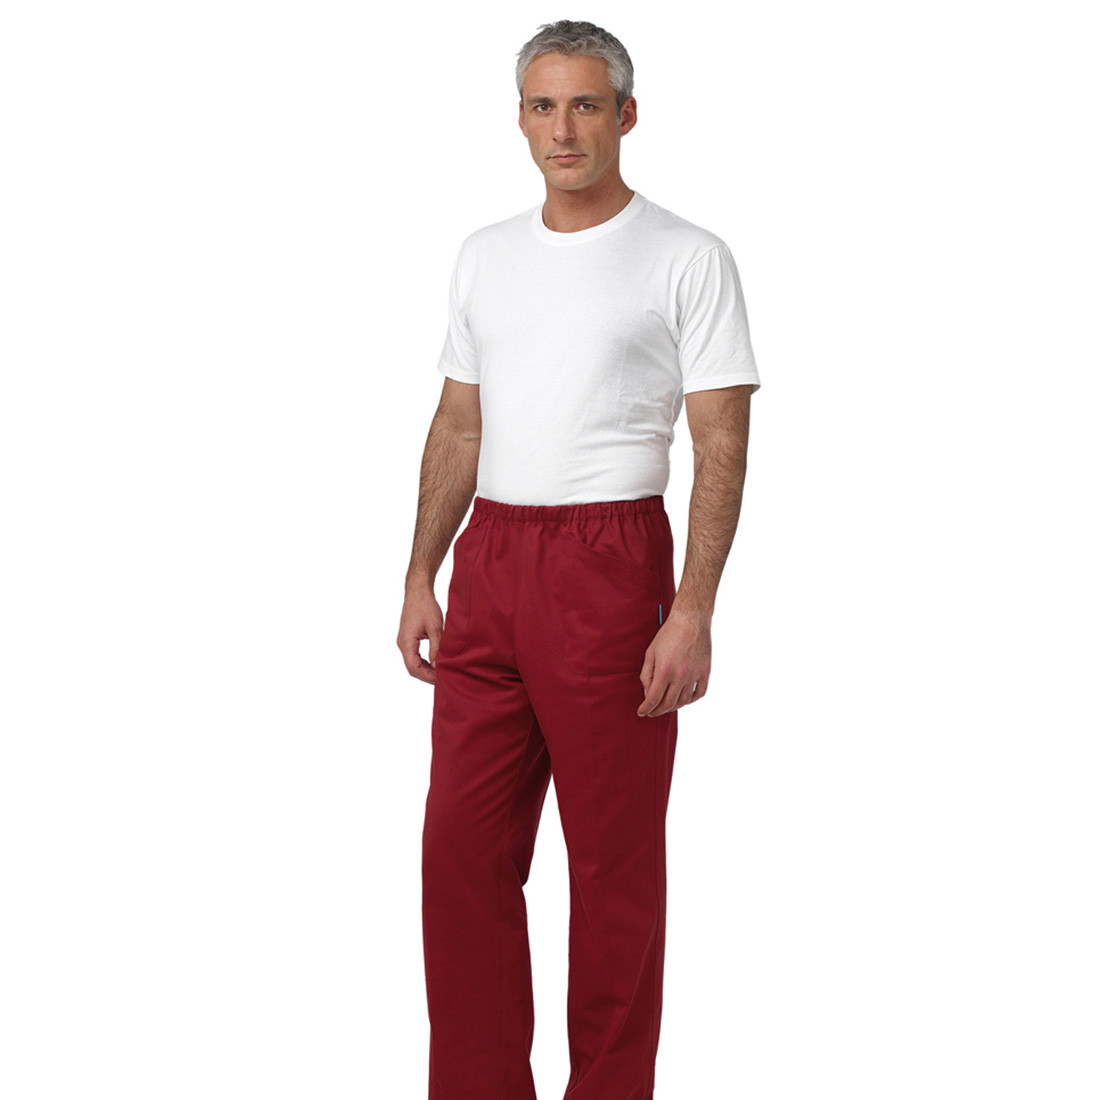 STAR II unisex medical trousers - Safetywear